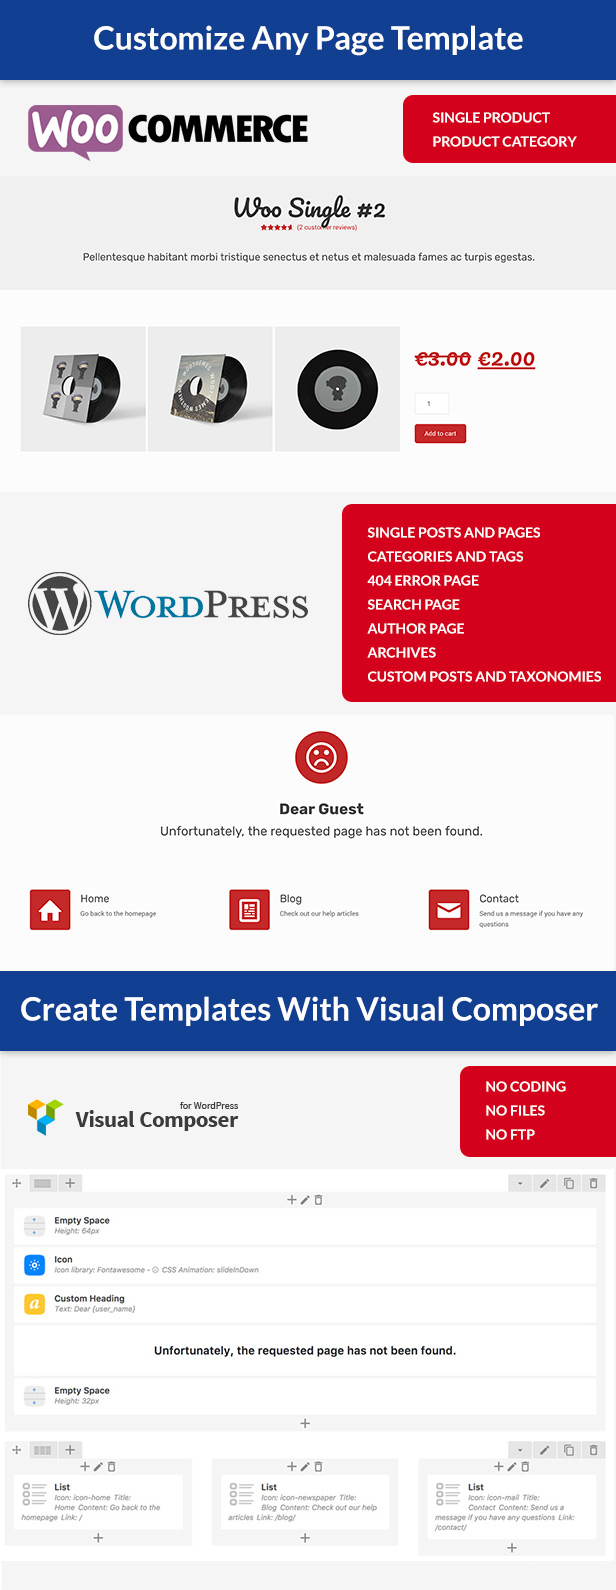 Custom Page Templates: New Way of Creating Custom Templates in WordPress - 3